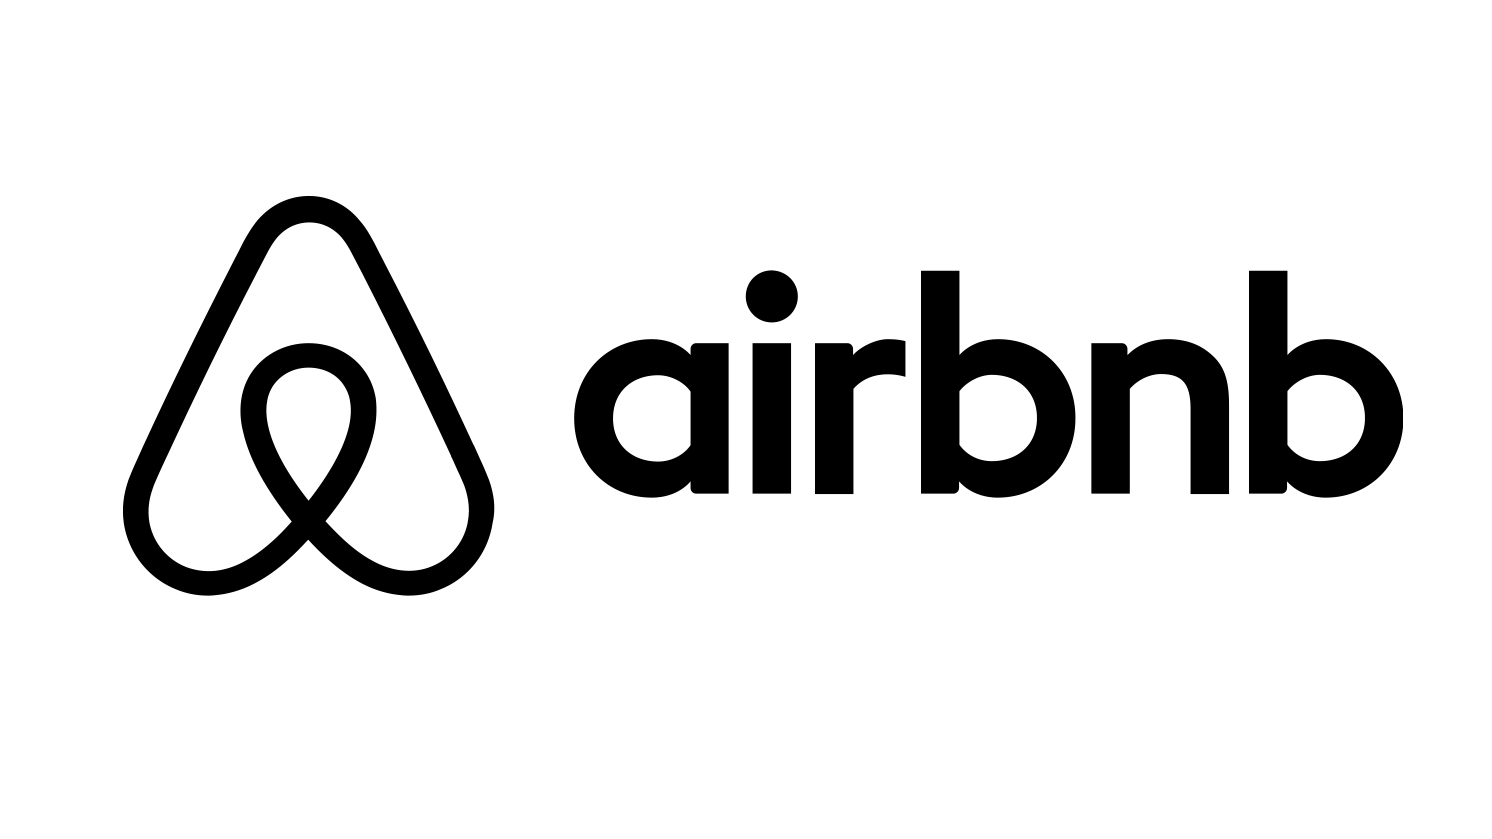 Aairbnb-logo-black-transparent